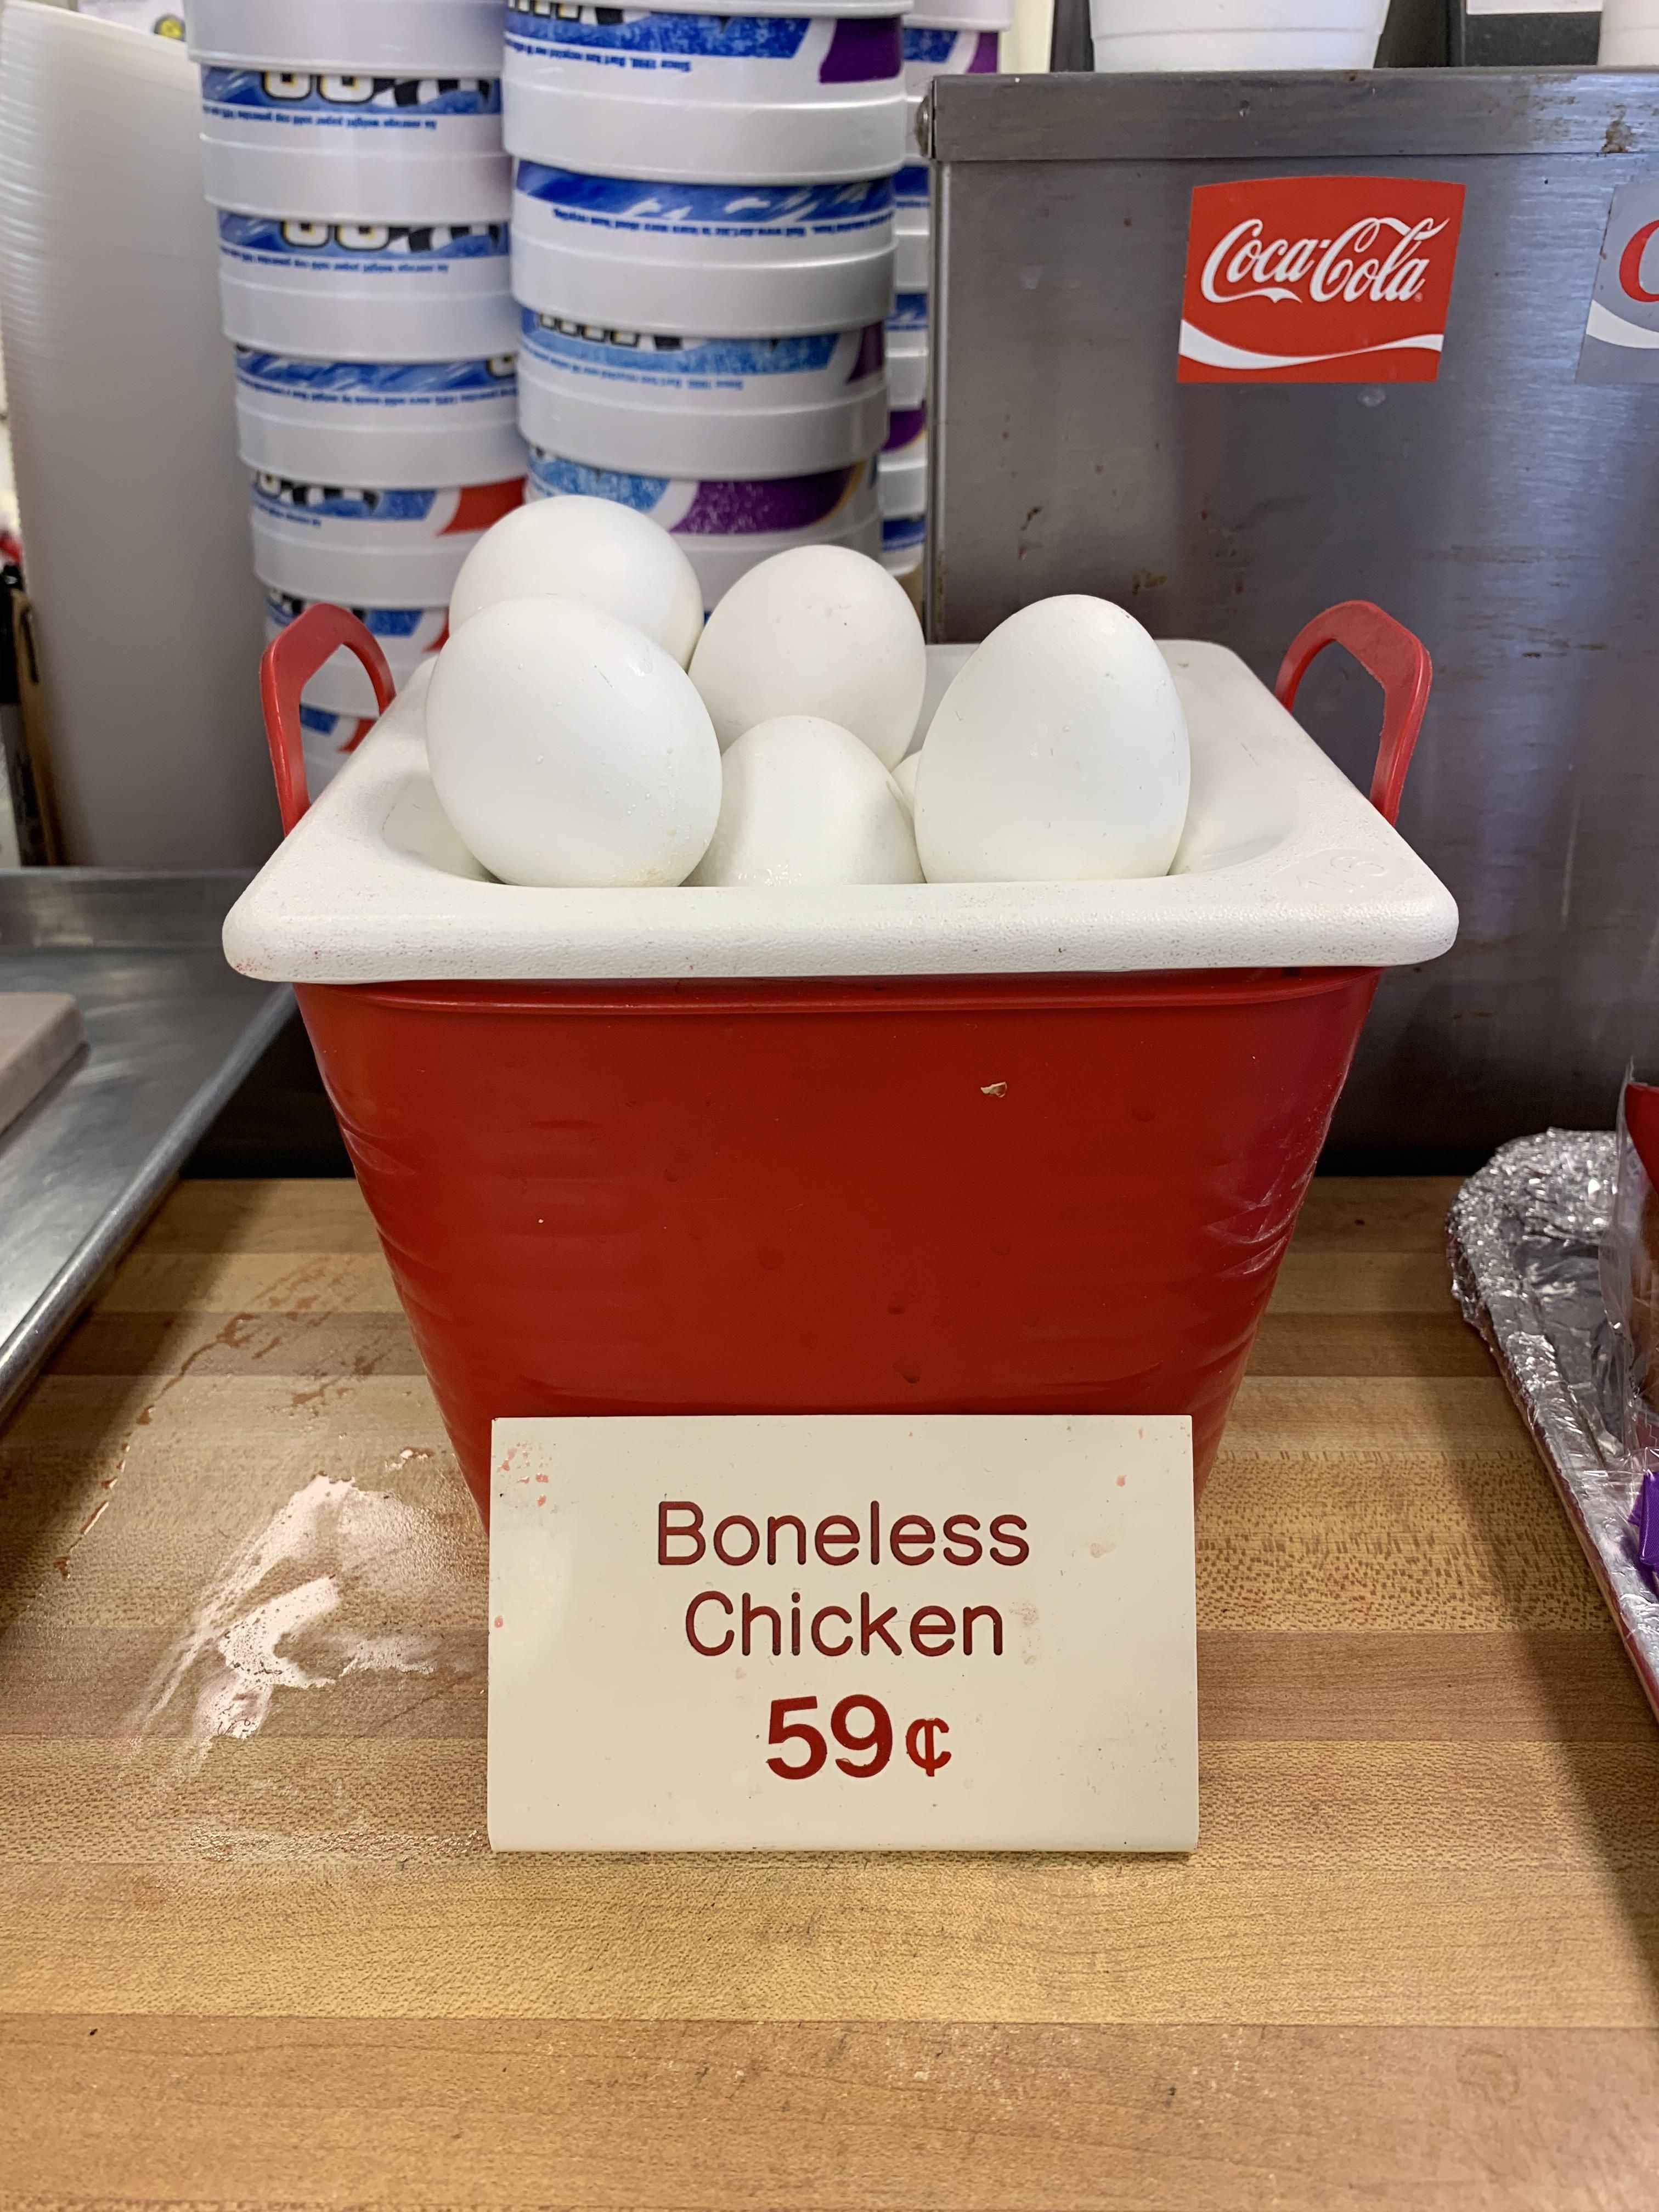 Would you like to buy a boneless chicken?